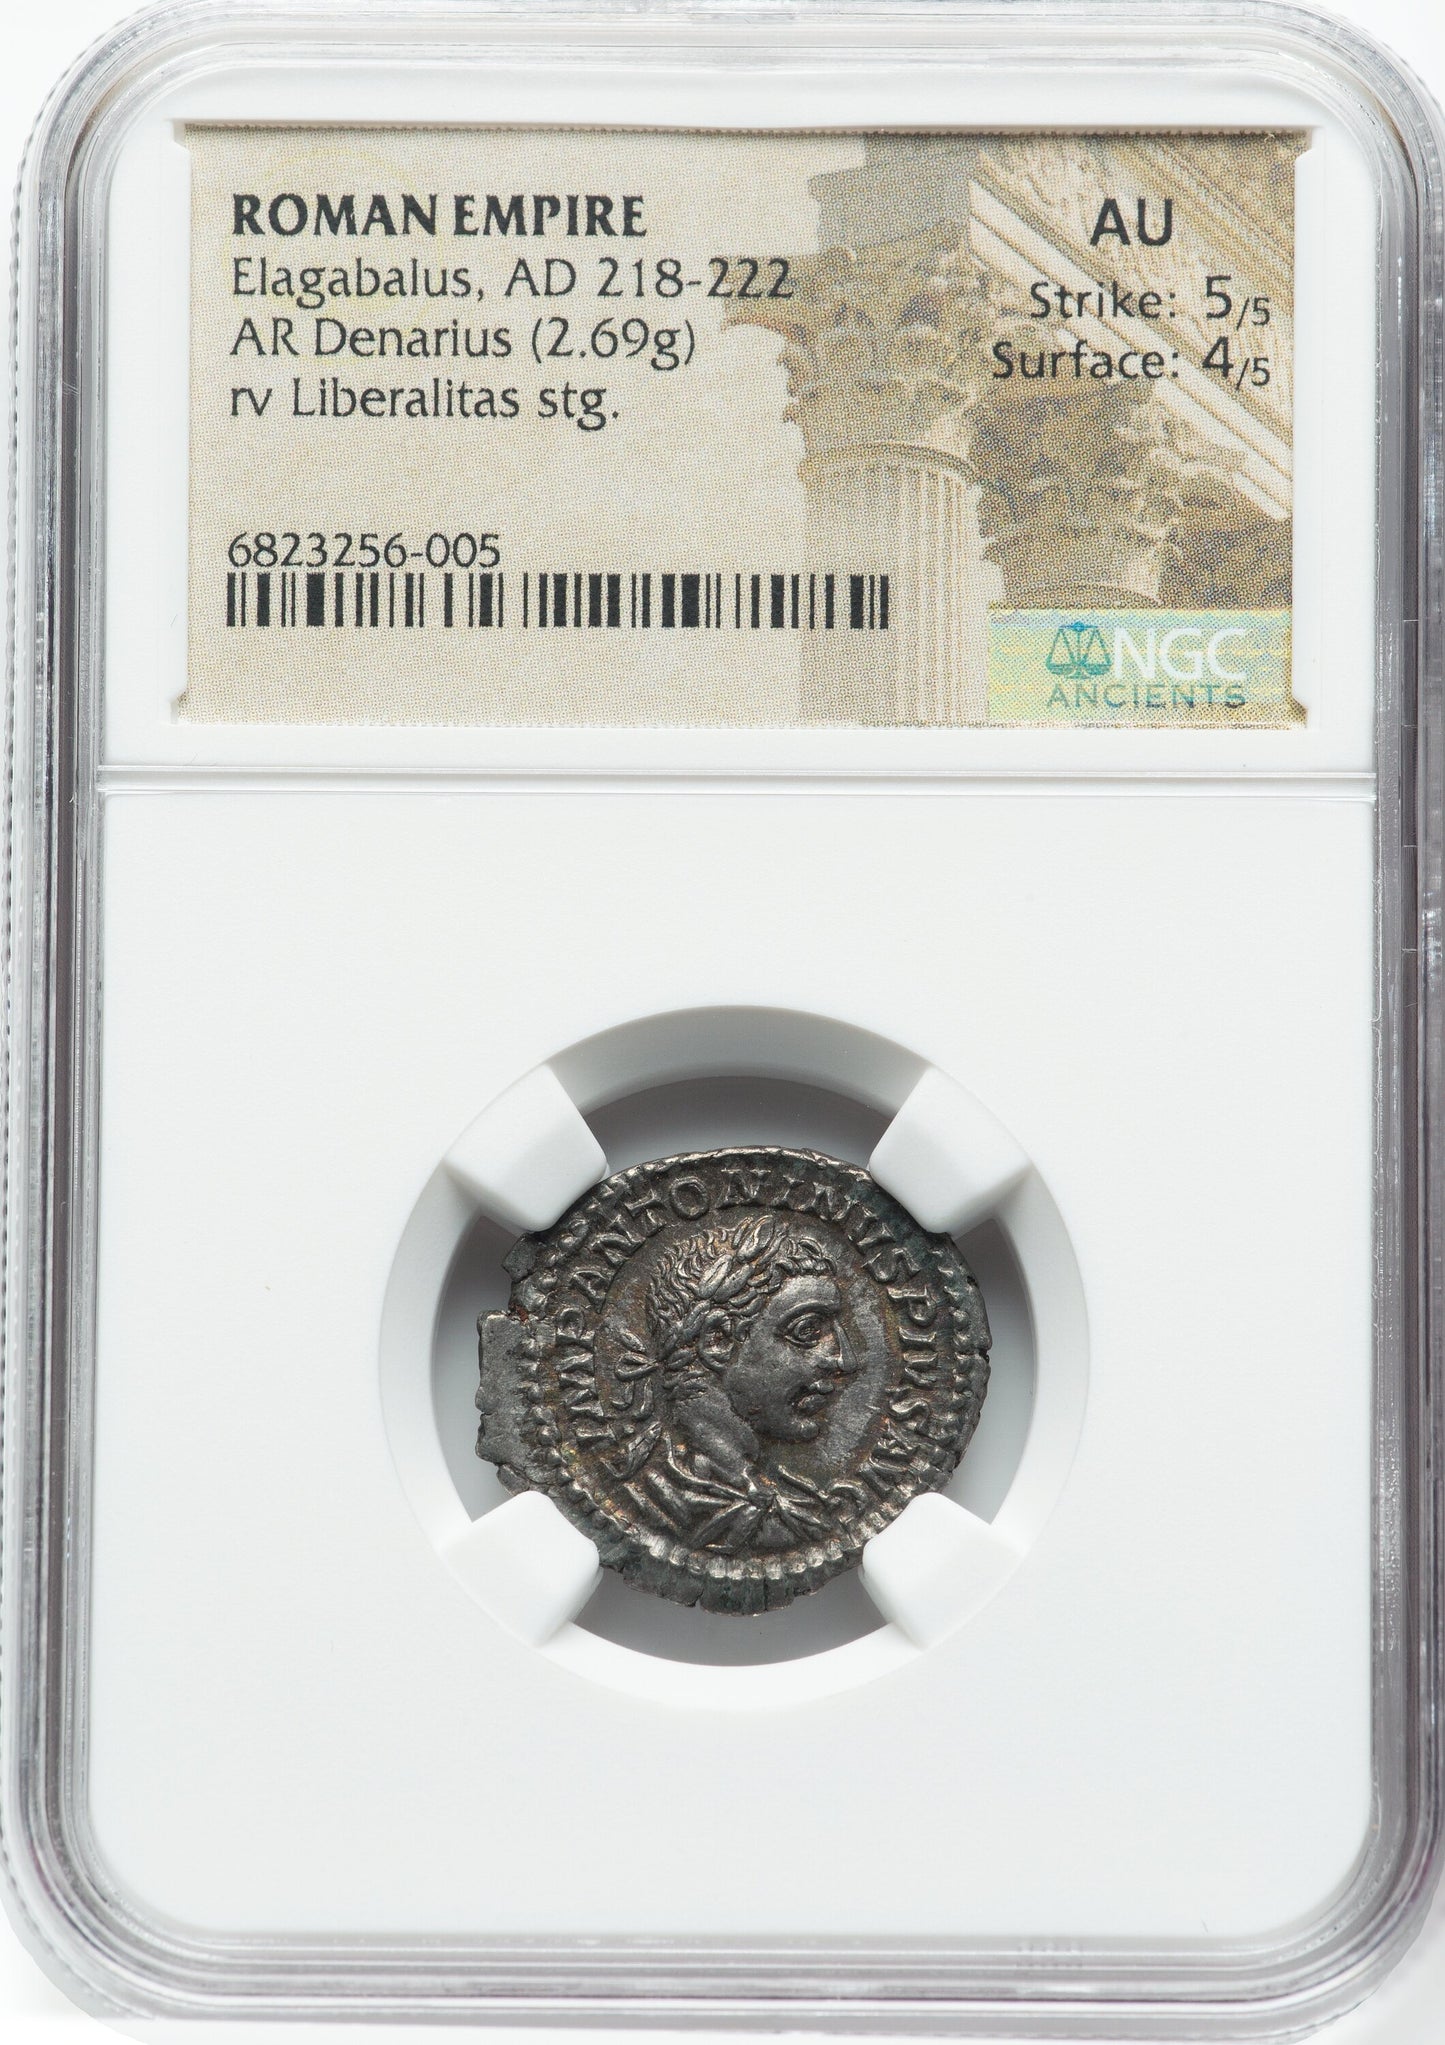 Roman Empire - Elagabalus - Silver Denarius - NGC AU - RIC:100